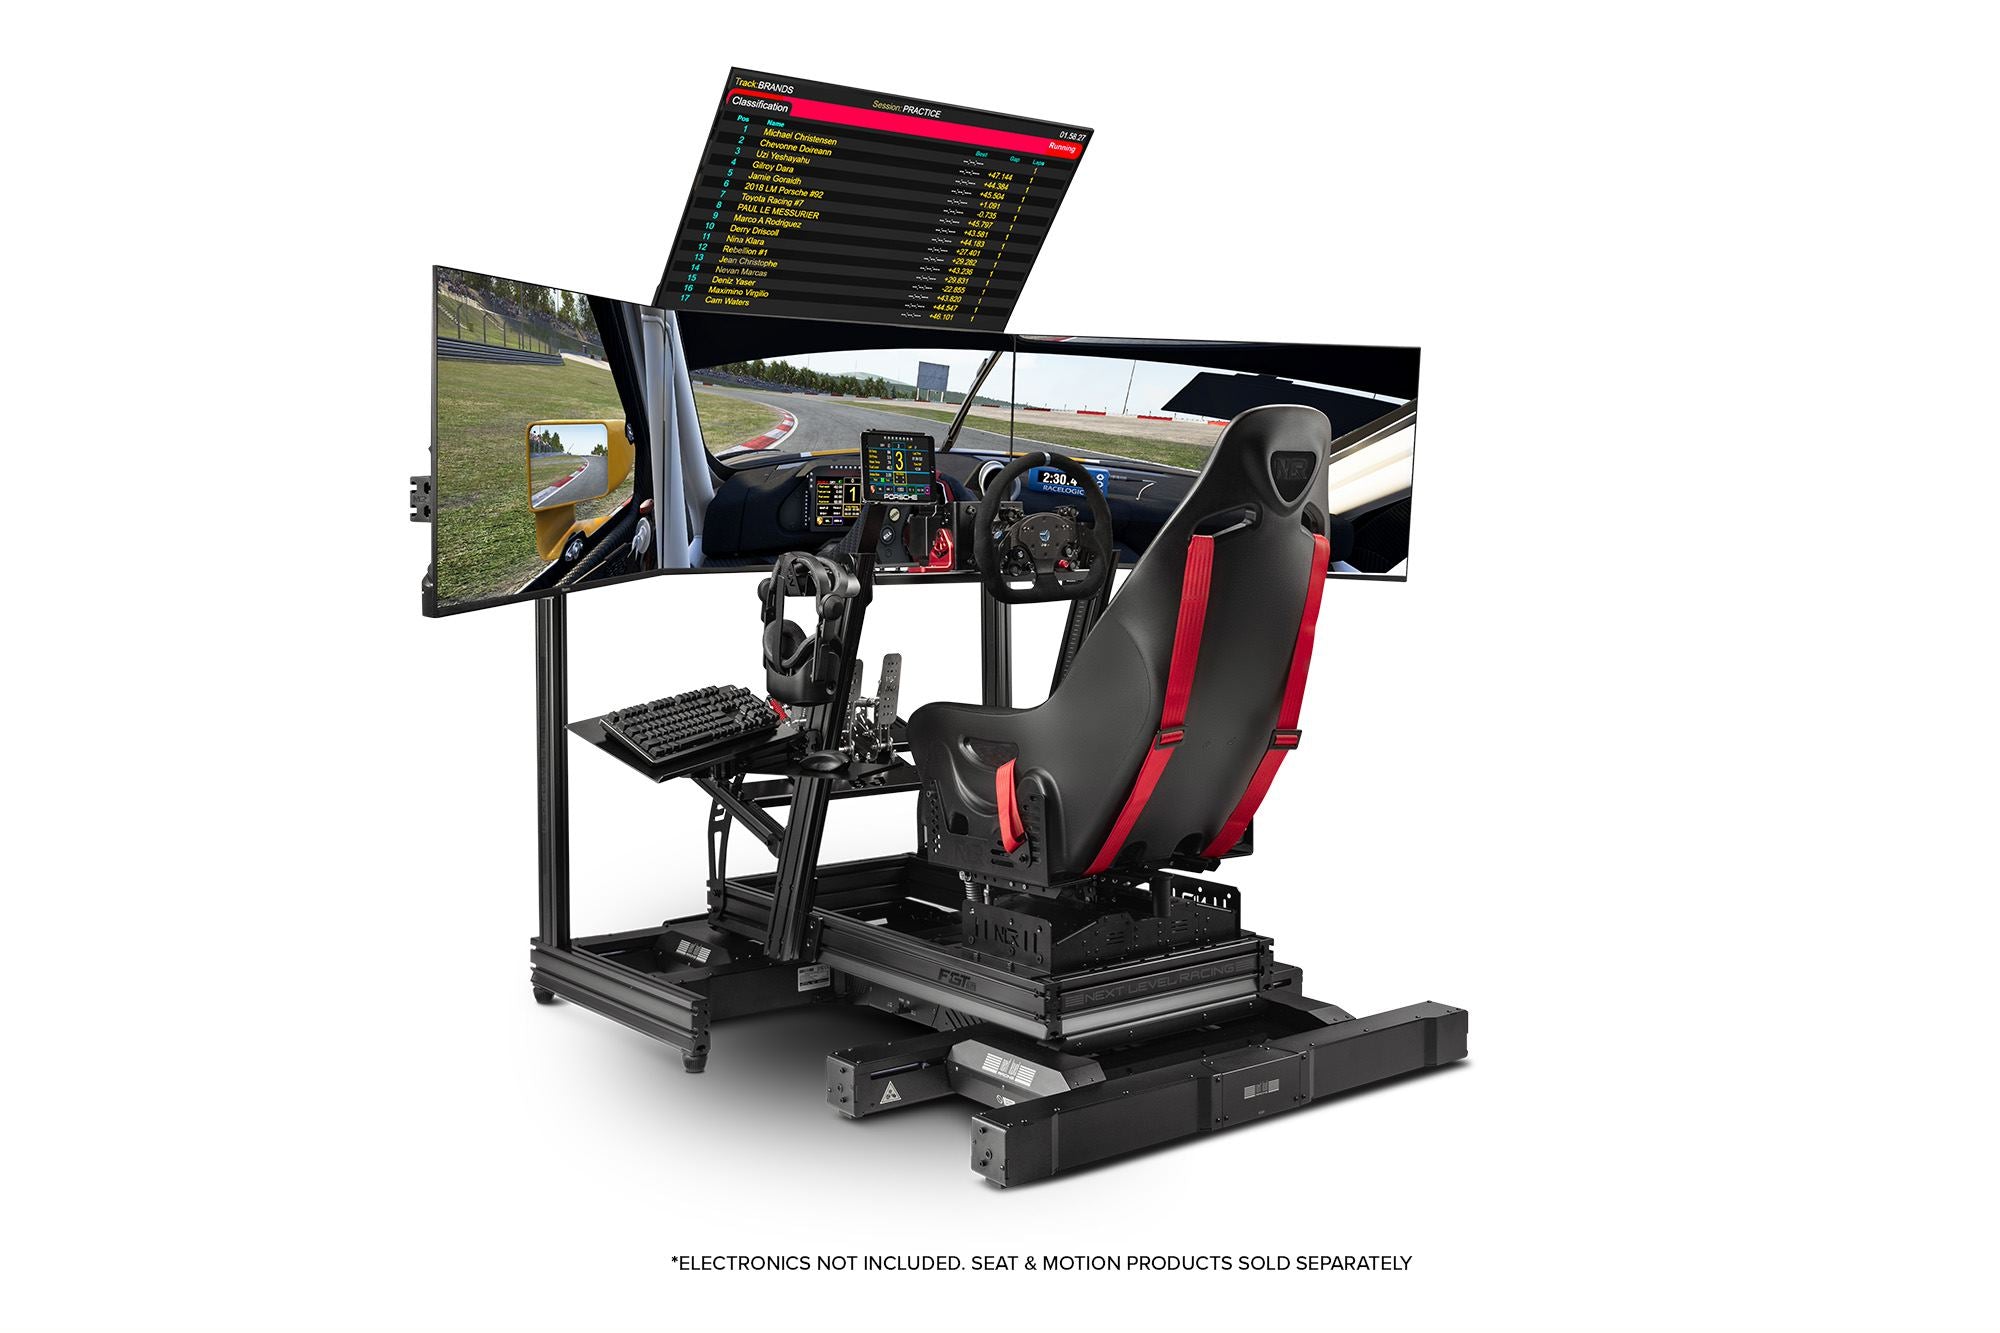 Next Level Racing F-GT Elite Formula & GT Aluminum Profile Simulator Cockpit - Front & Side Mount